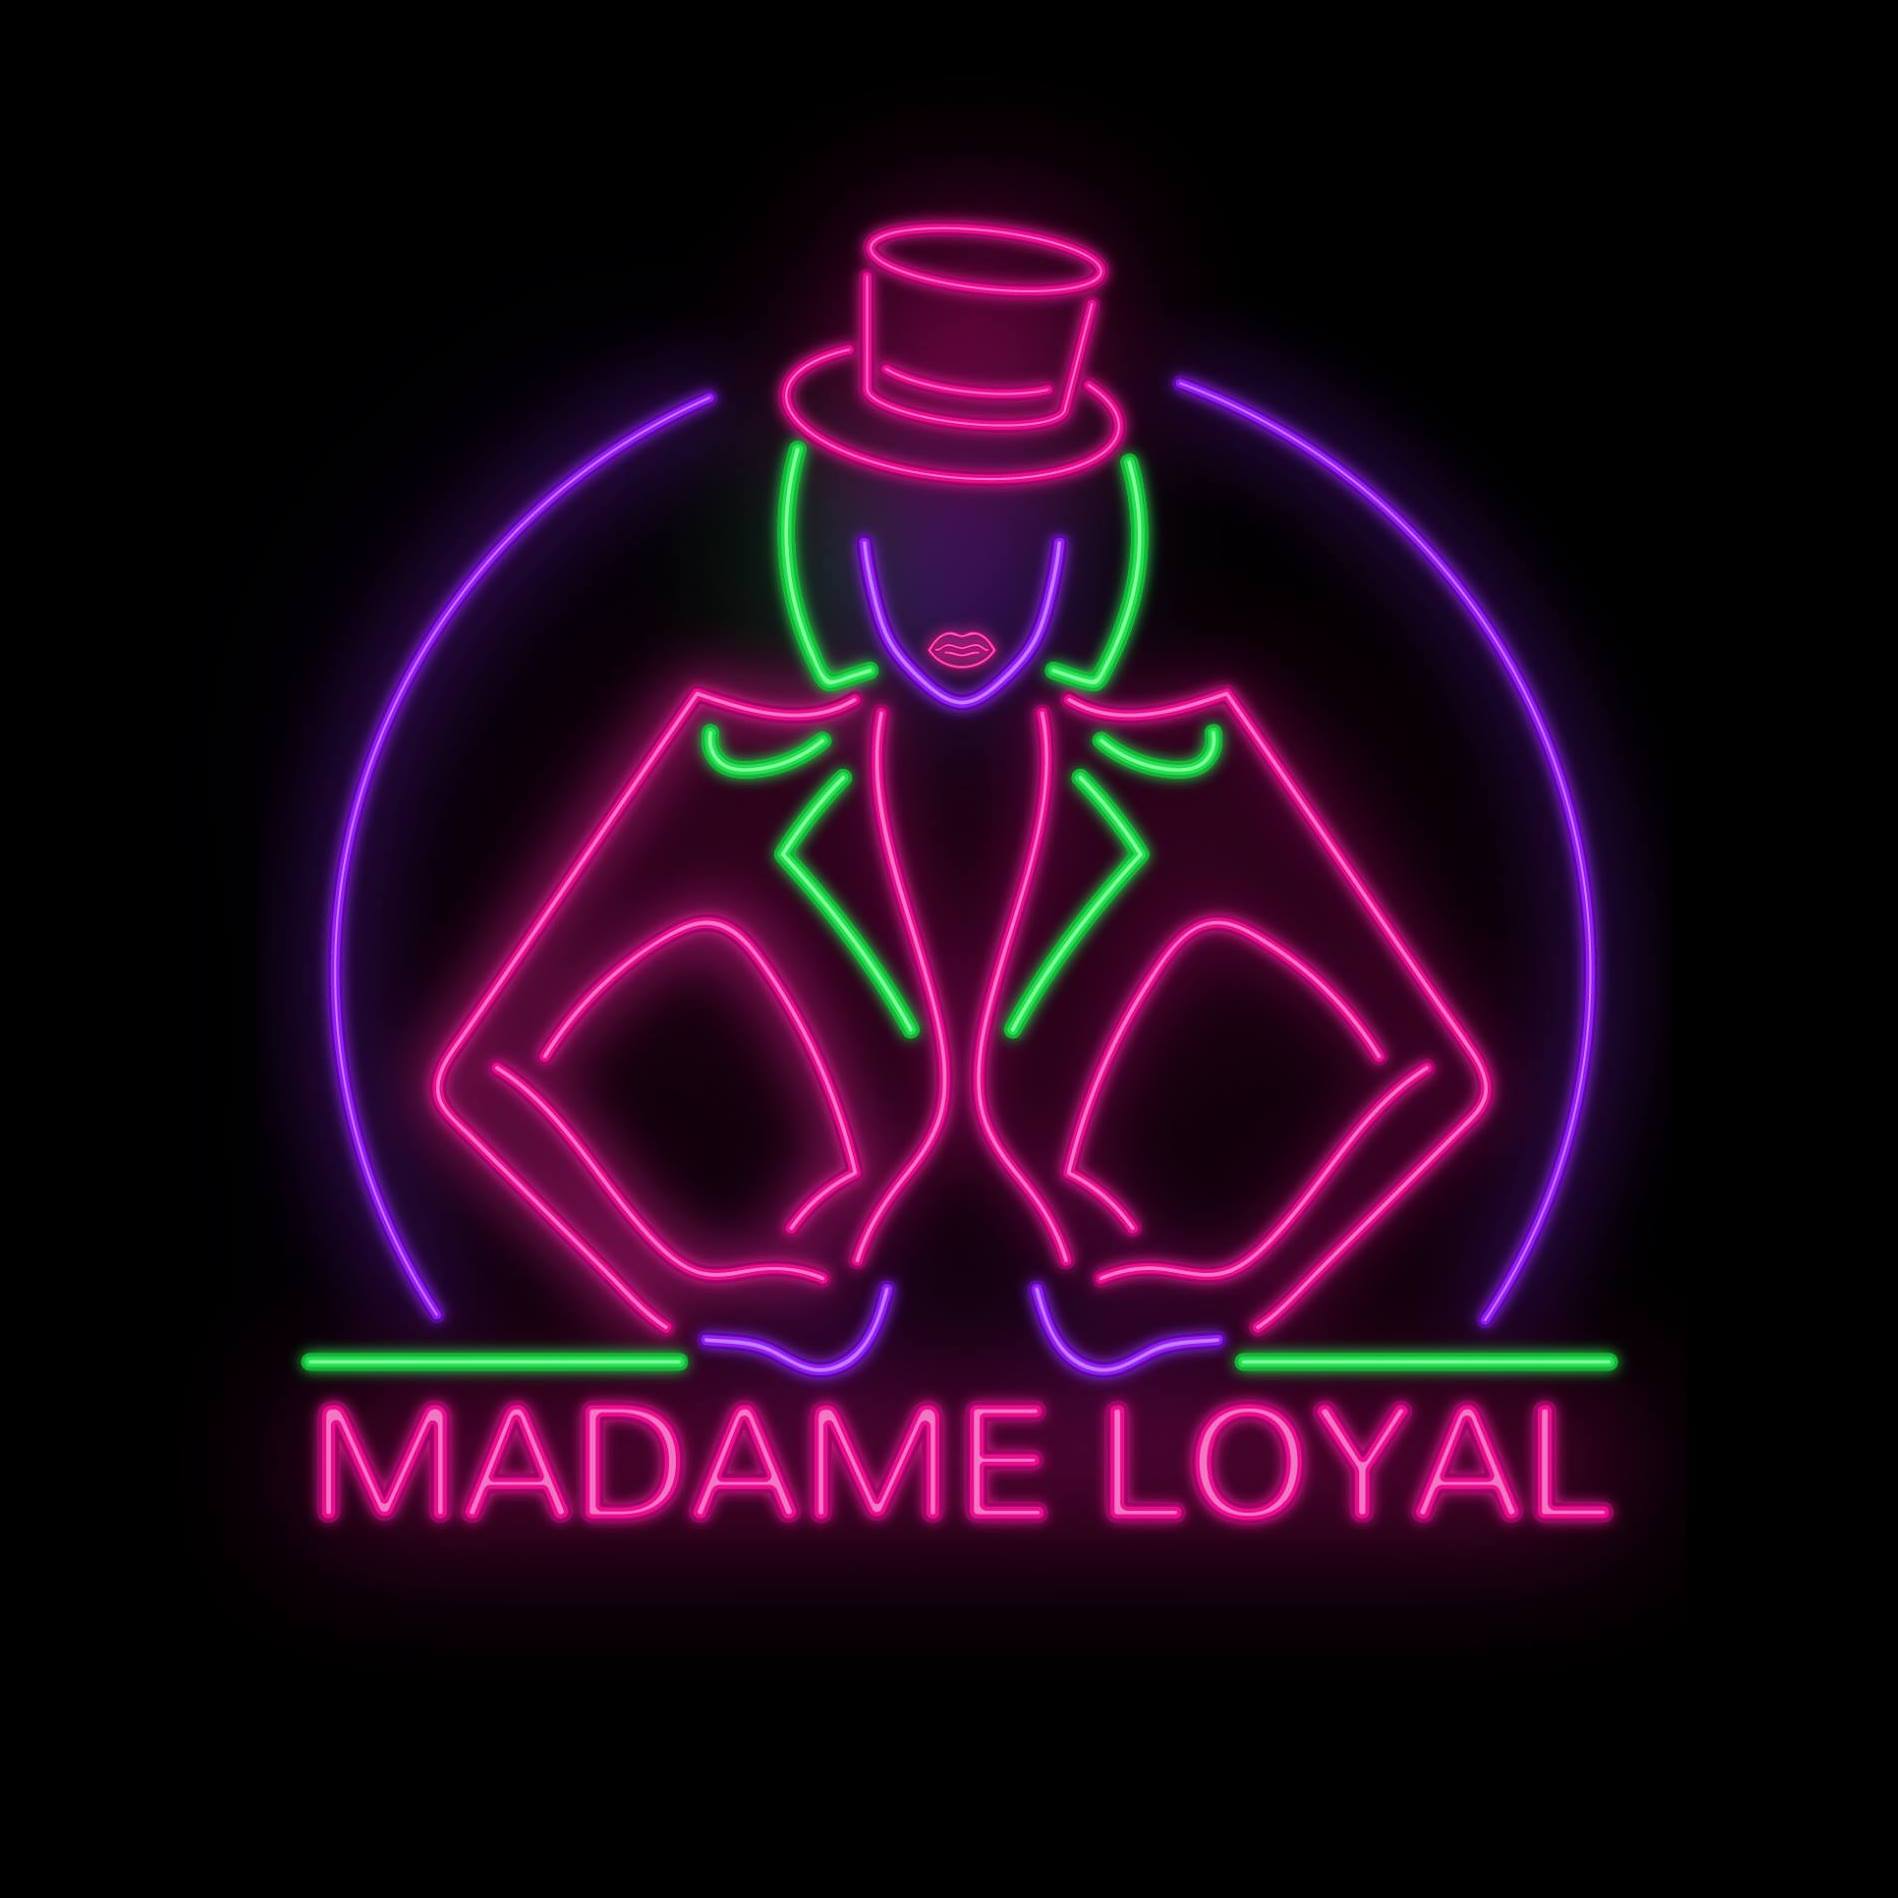 Madame Loyal Bordeaux Tickets